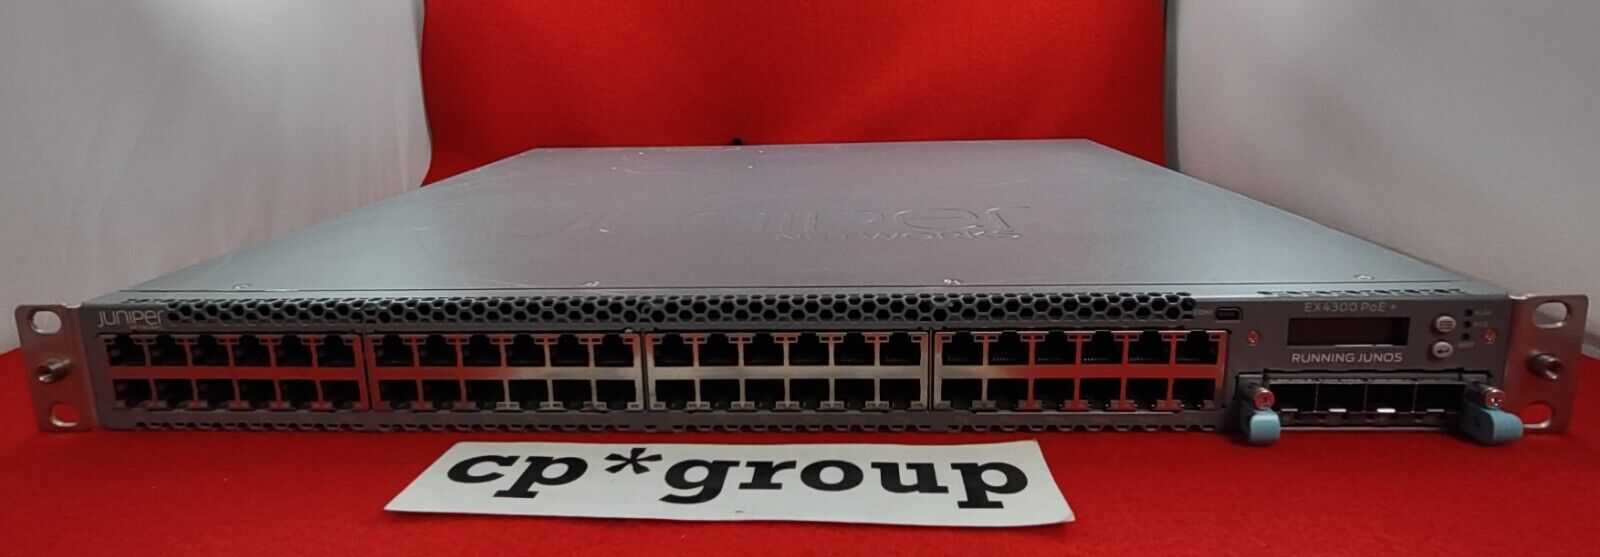 Juniper 48-Port PoE GbE Network Switch w/ 4-Port 10GB SFP+ Module EX4300-48P